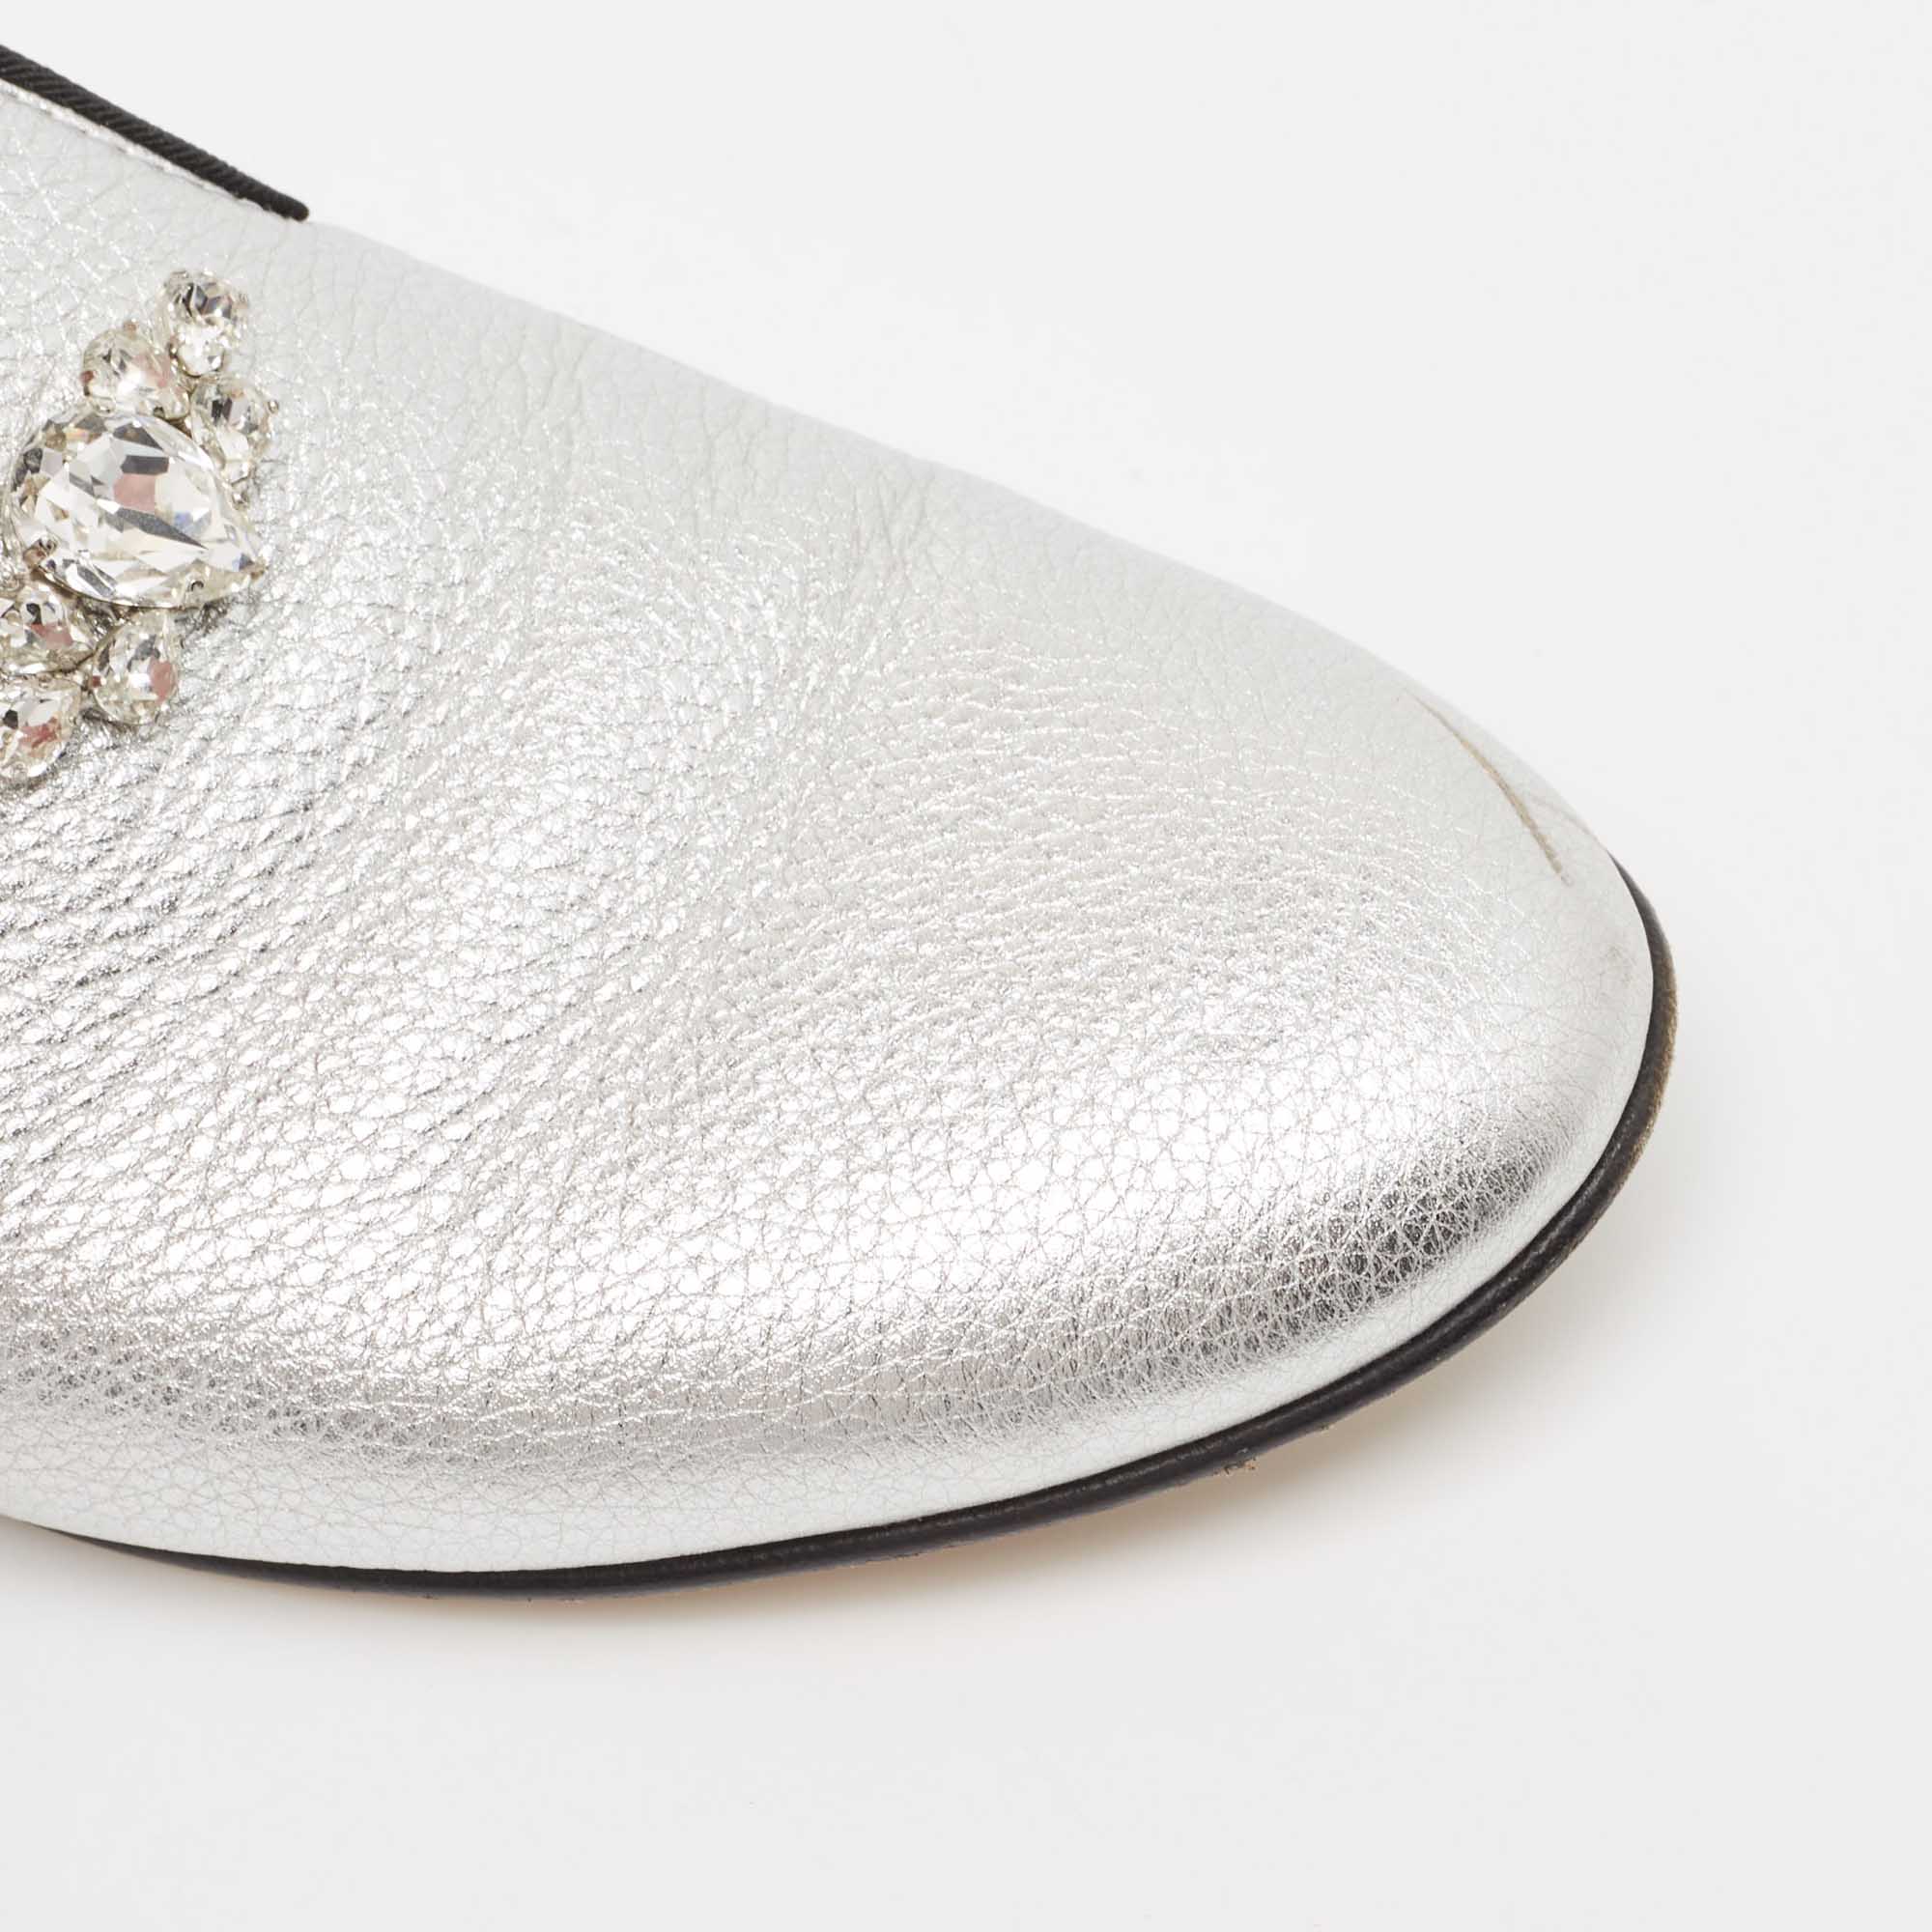 Giuseppe Zanotti Silver Leather Crystal Embellished Smoking Slippers Size 39